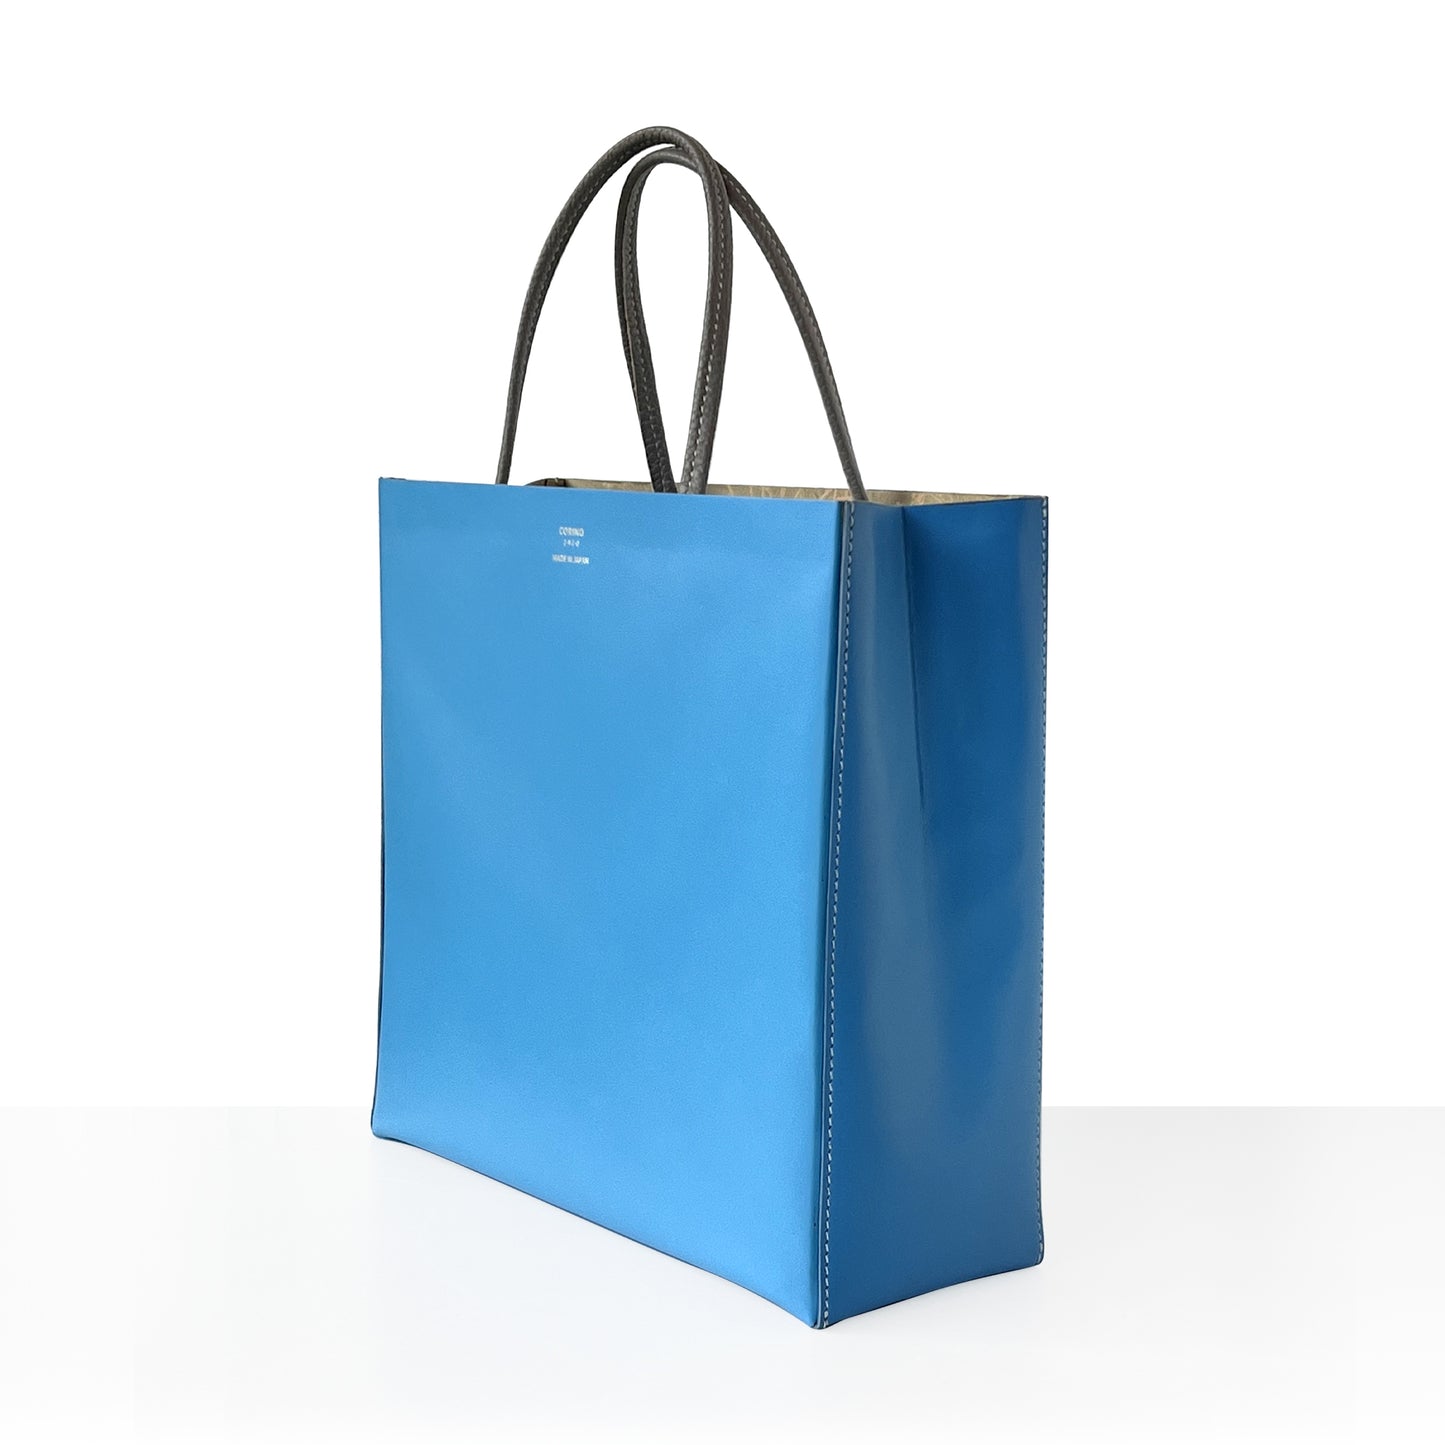 PBS handbag /  M size / limited quantity color